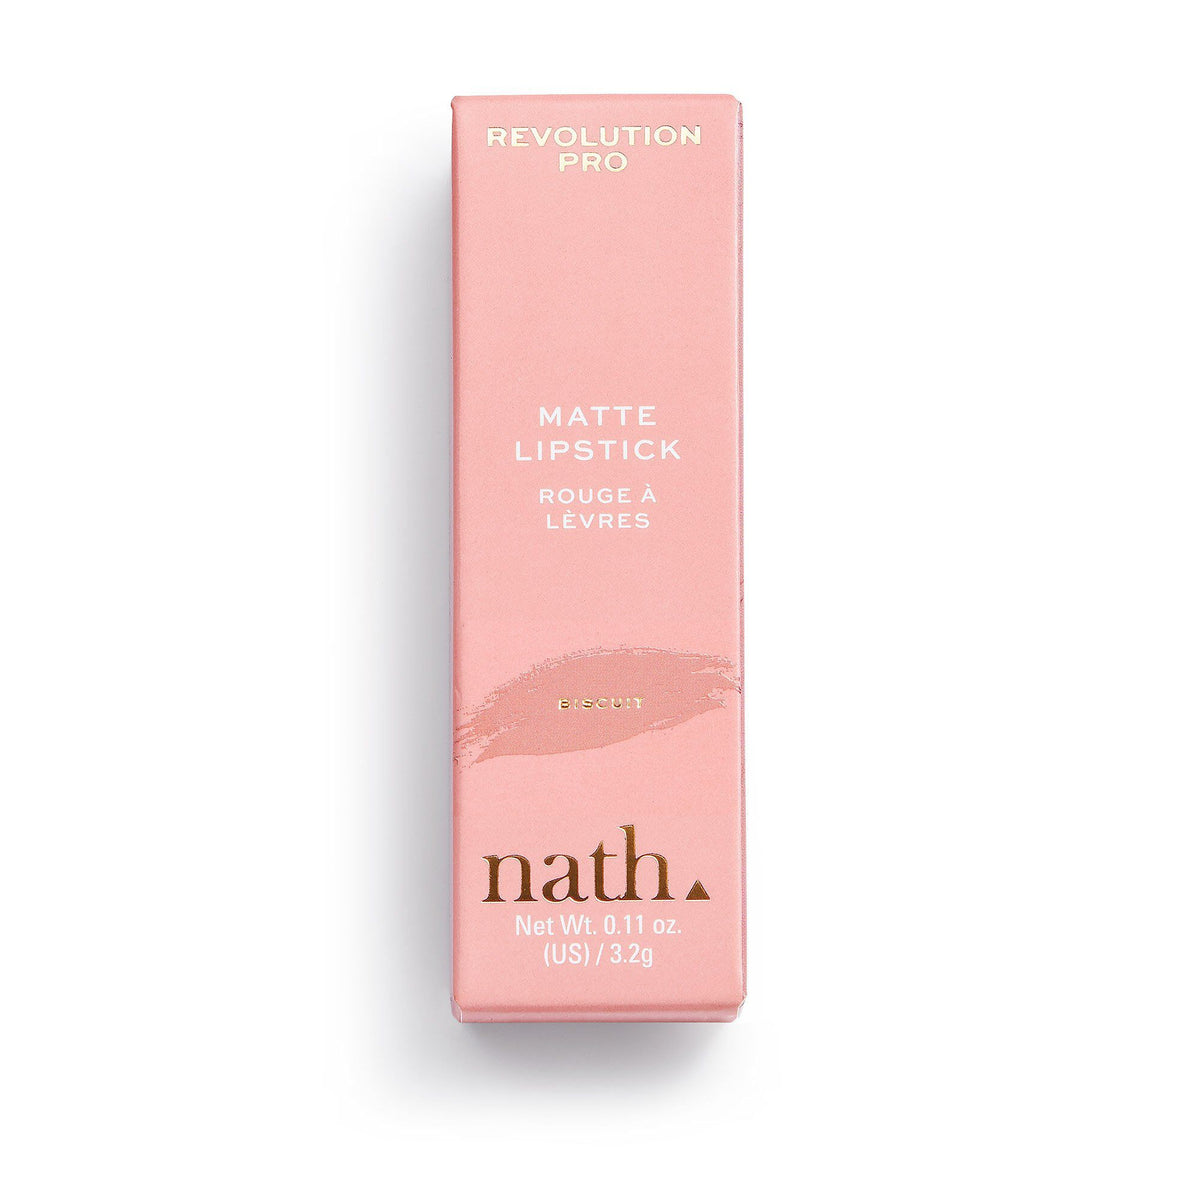 Revolution Pro Nath Collection Lipstick Biscuit